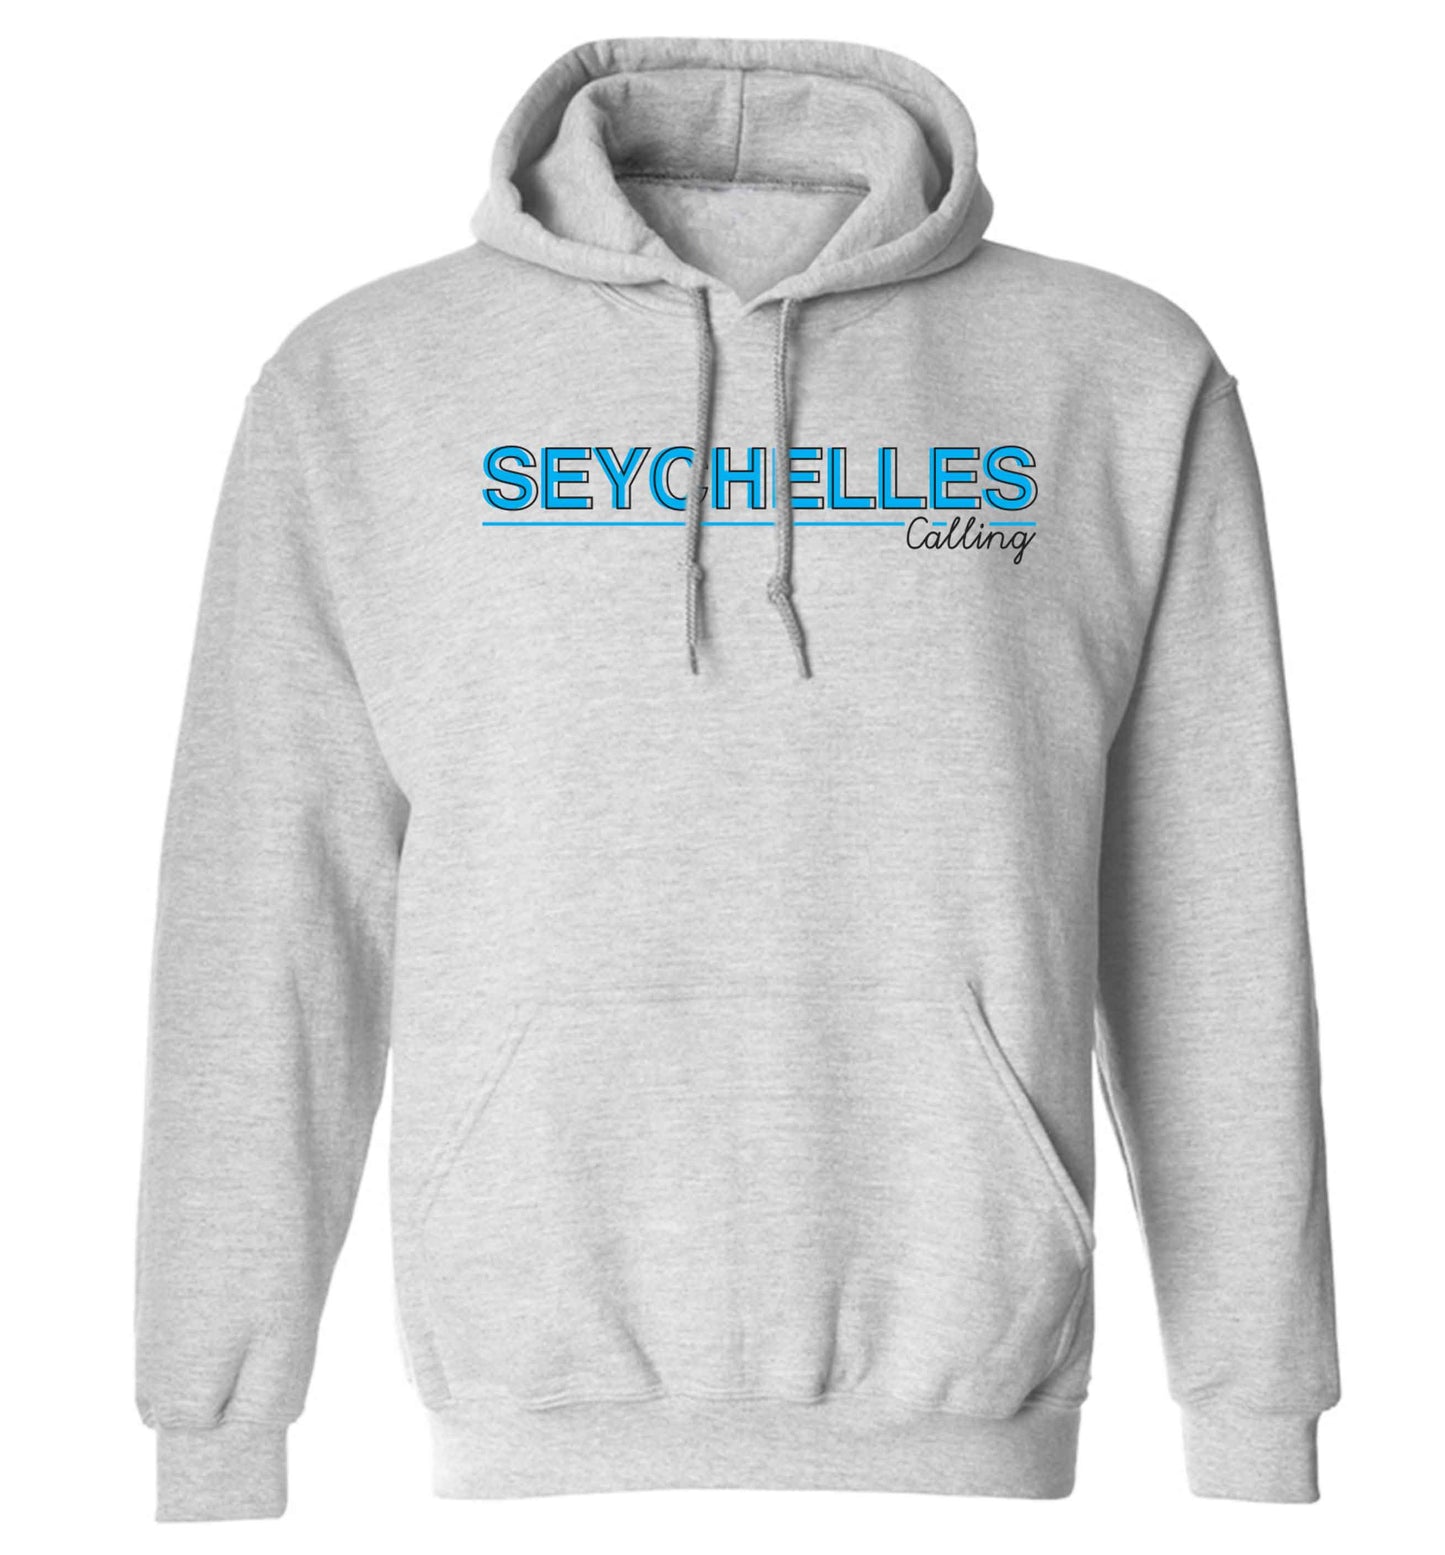 Seychelles calling adults unisex grey hoodie 2XL